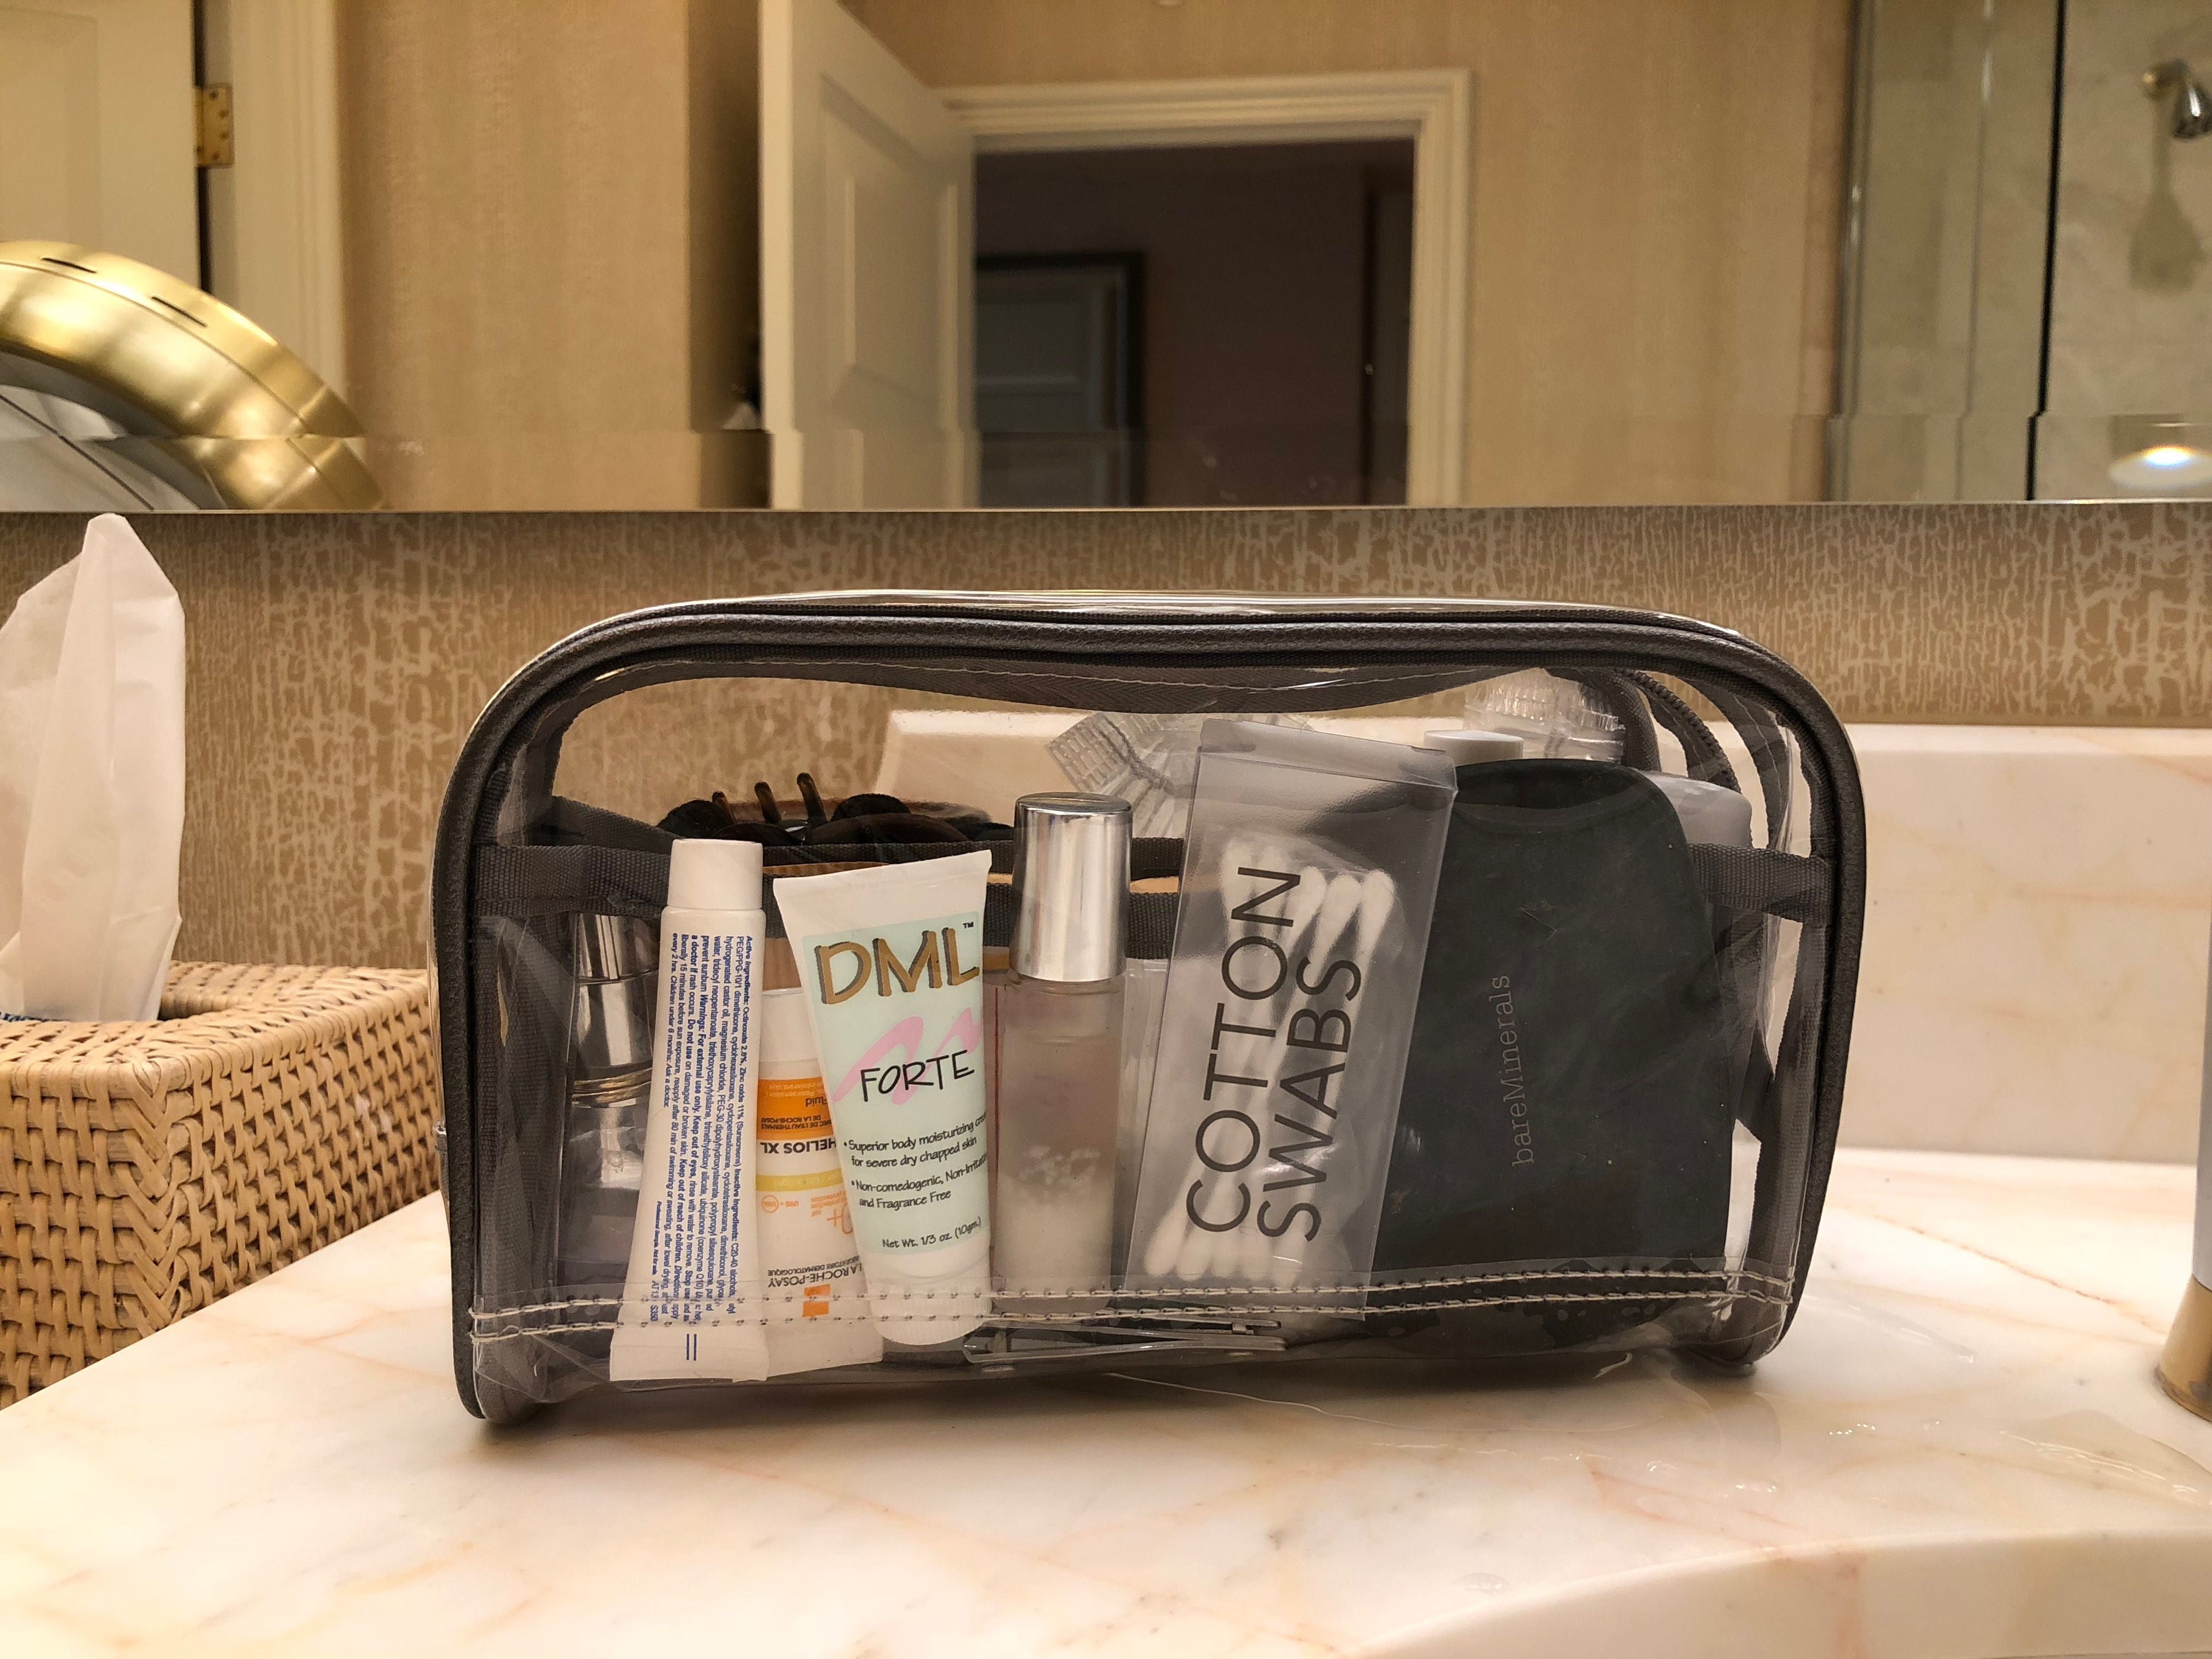 Weekend trip essentials on a clear makeup bag